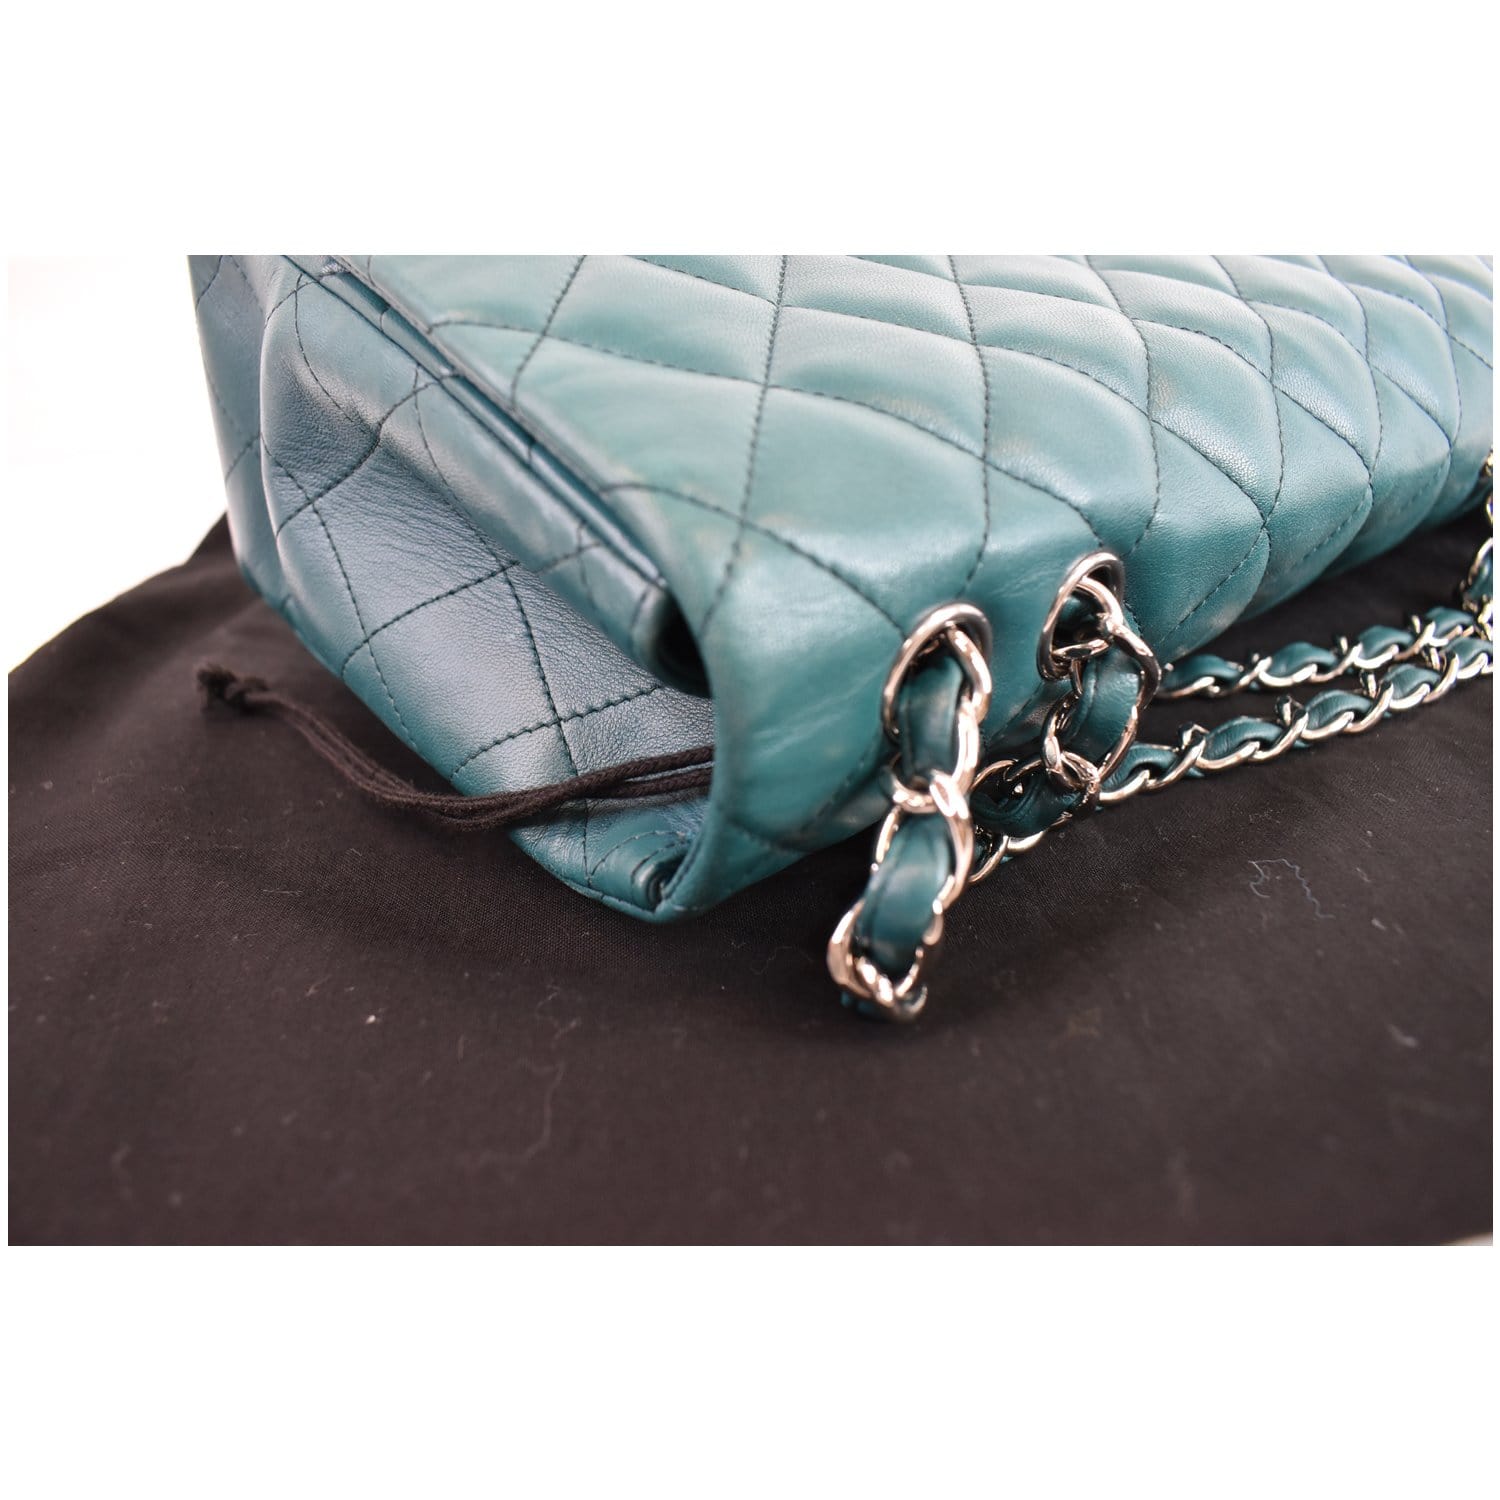 Chanel Jumbo Classic Double Flap Lambskin Crossbody Bag